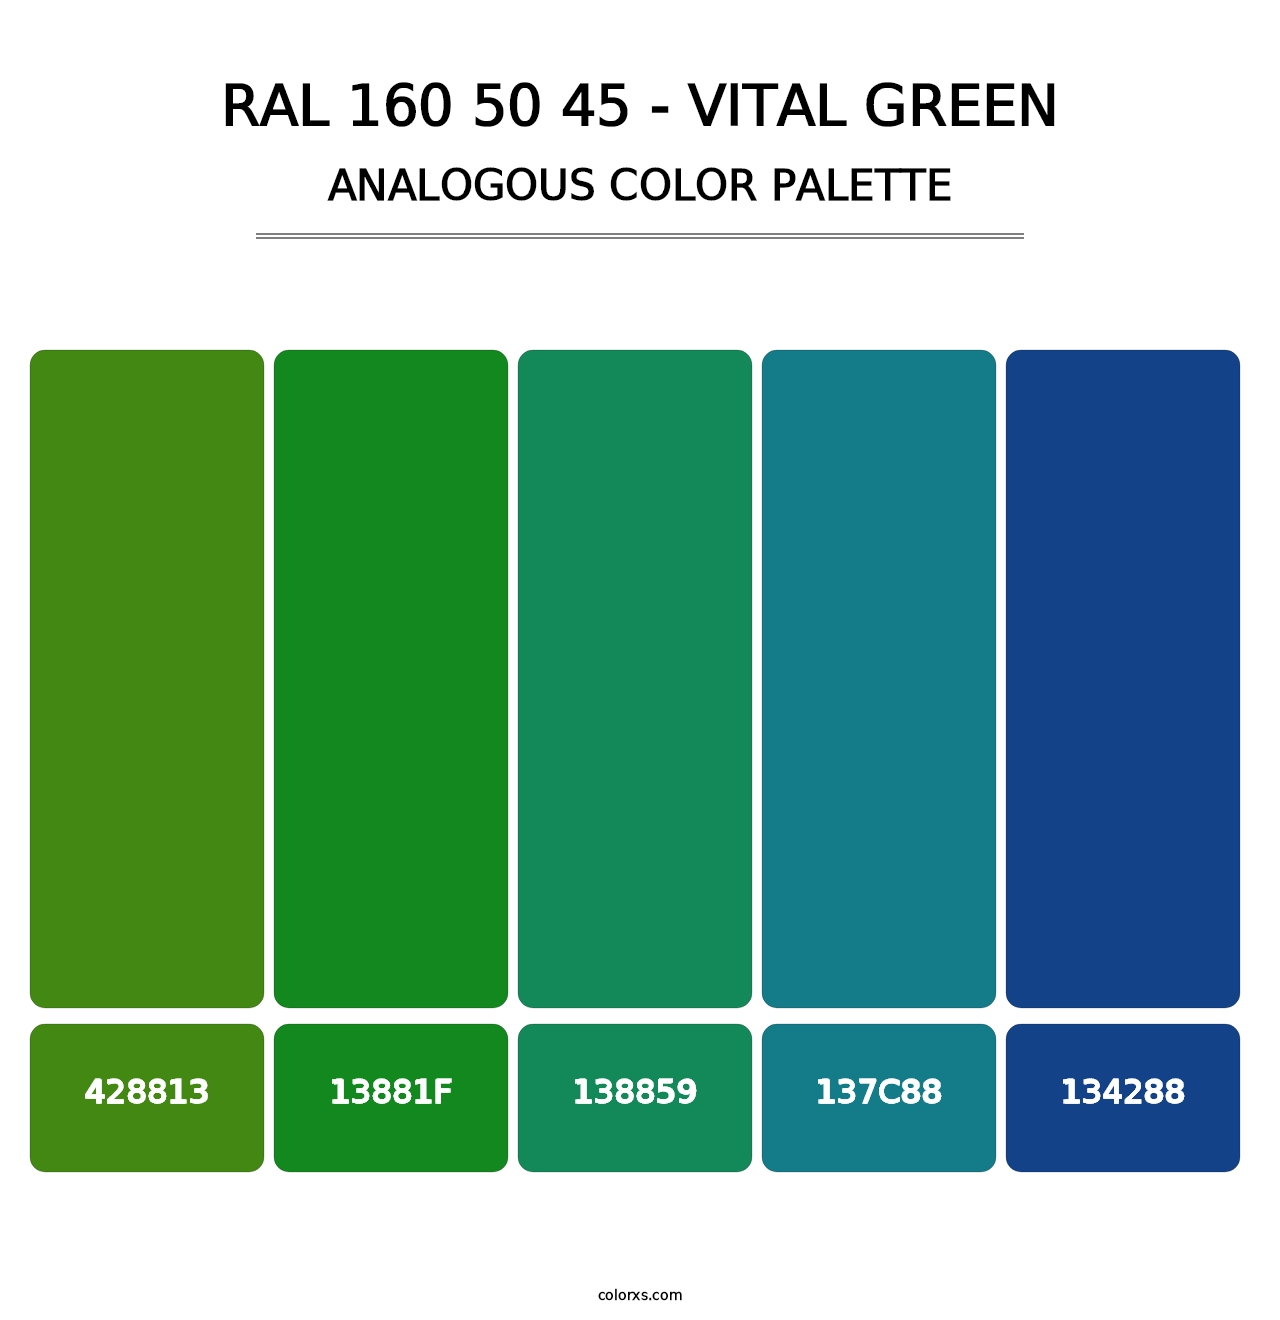 RAL 160 50 45 - Vital Green - Analogous Color Palette